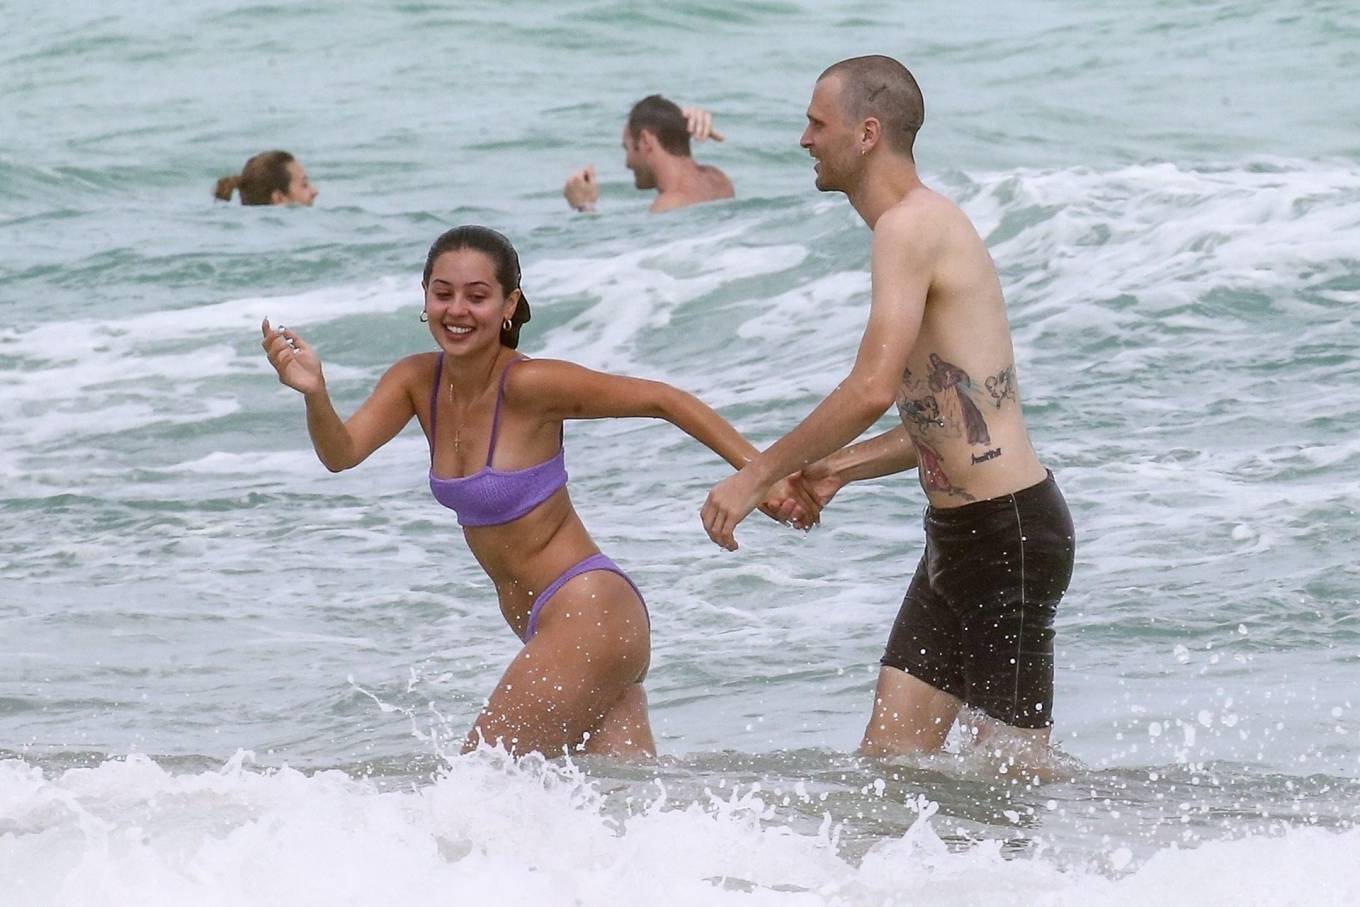 Alexa Demie - In bikini on the beach in Miami. 